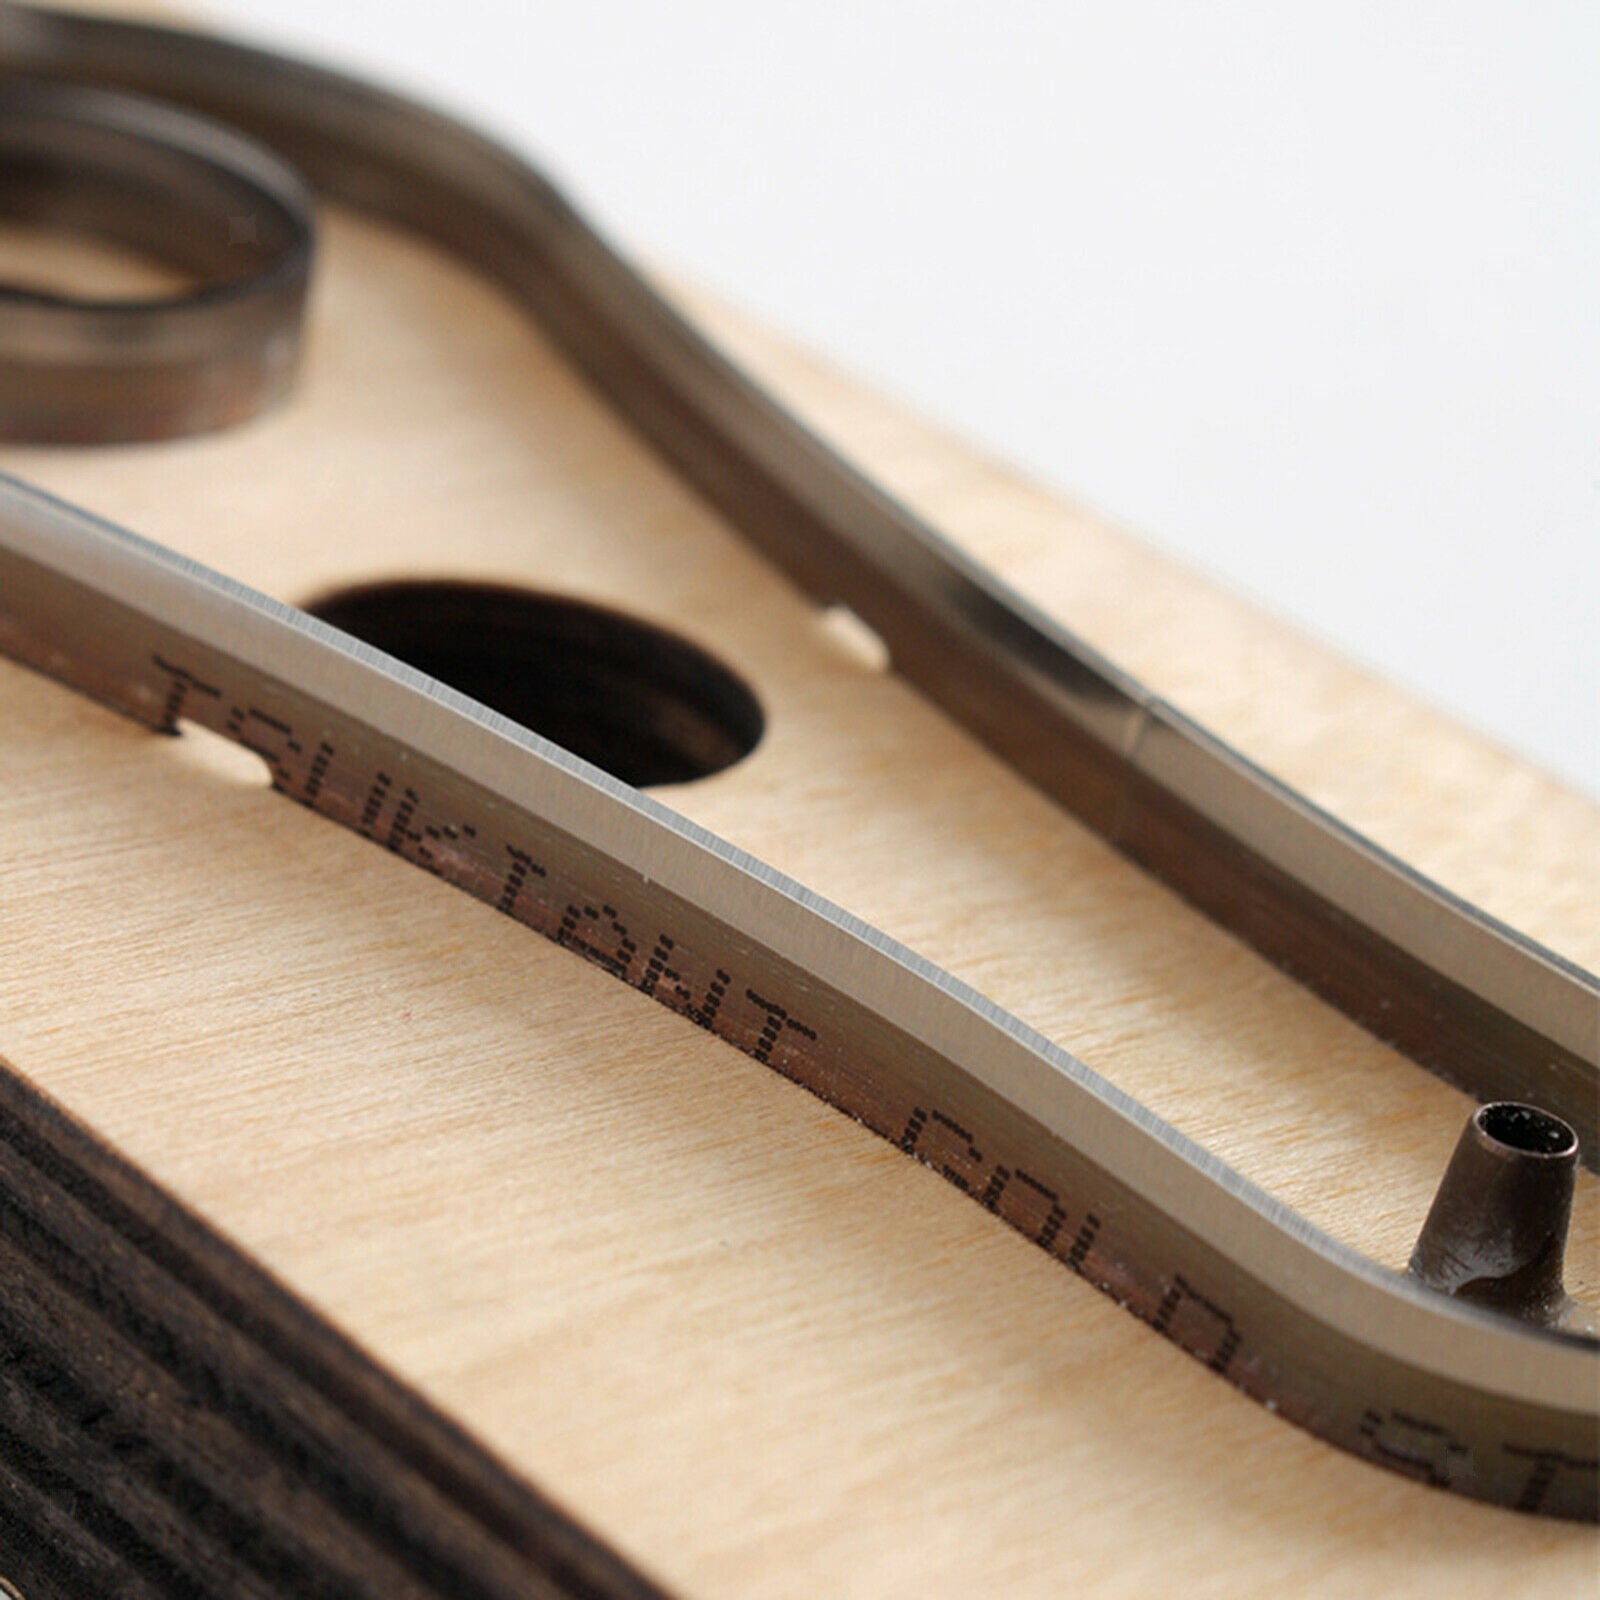 Leather Craft Dies Eyewear Lanyard Cutter Cut Mold Crafting Template Blade